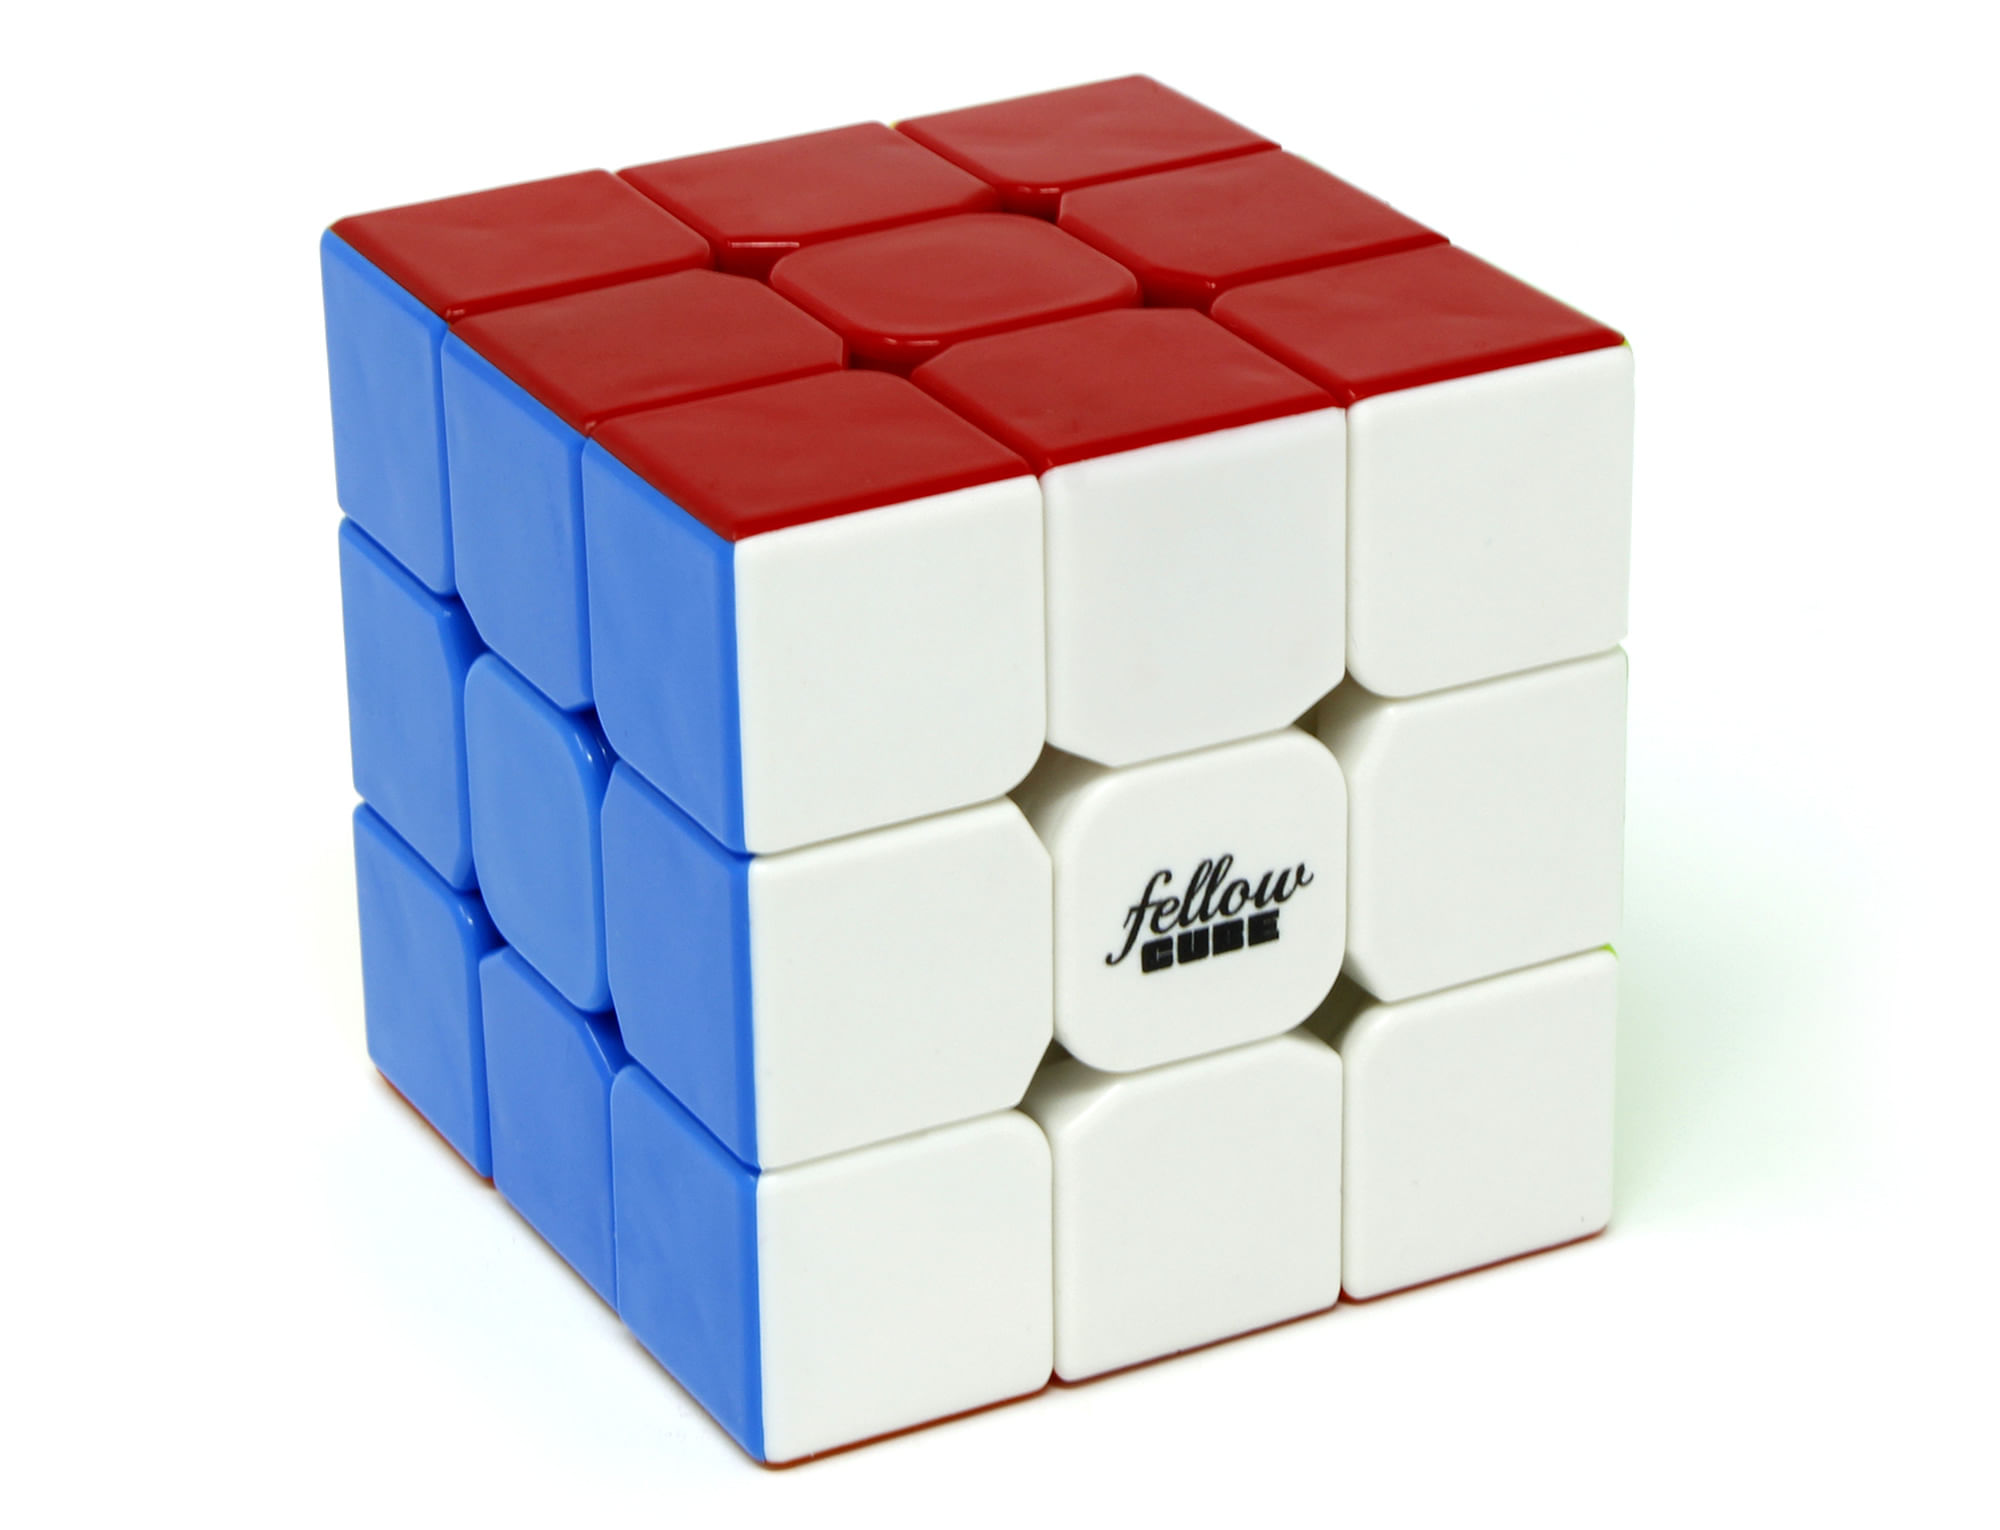 Cubo Mágico Profissional Cuber Pro 3 Color